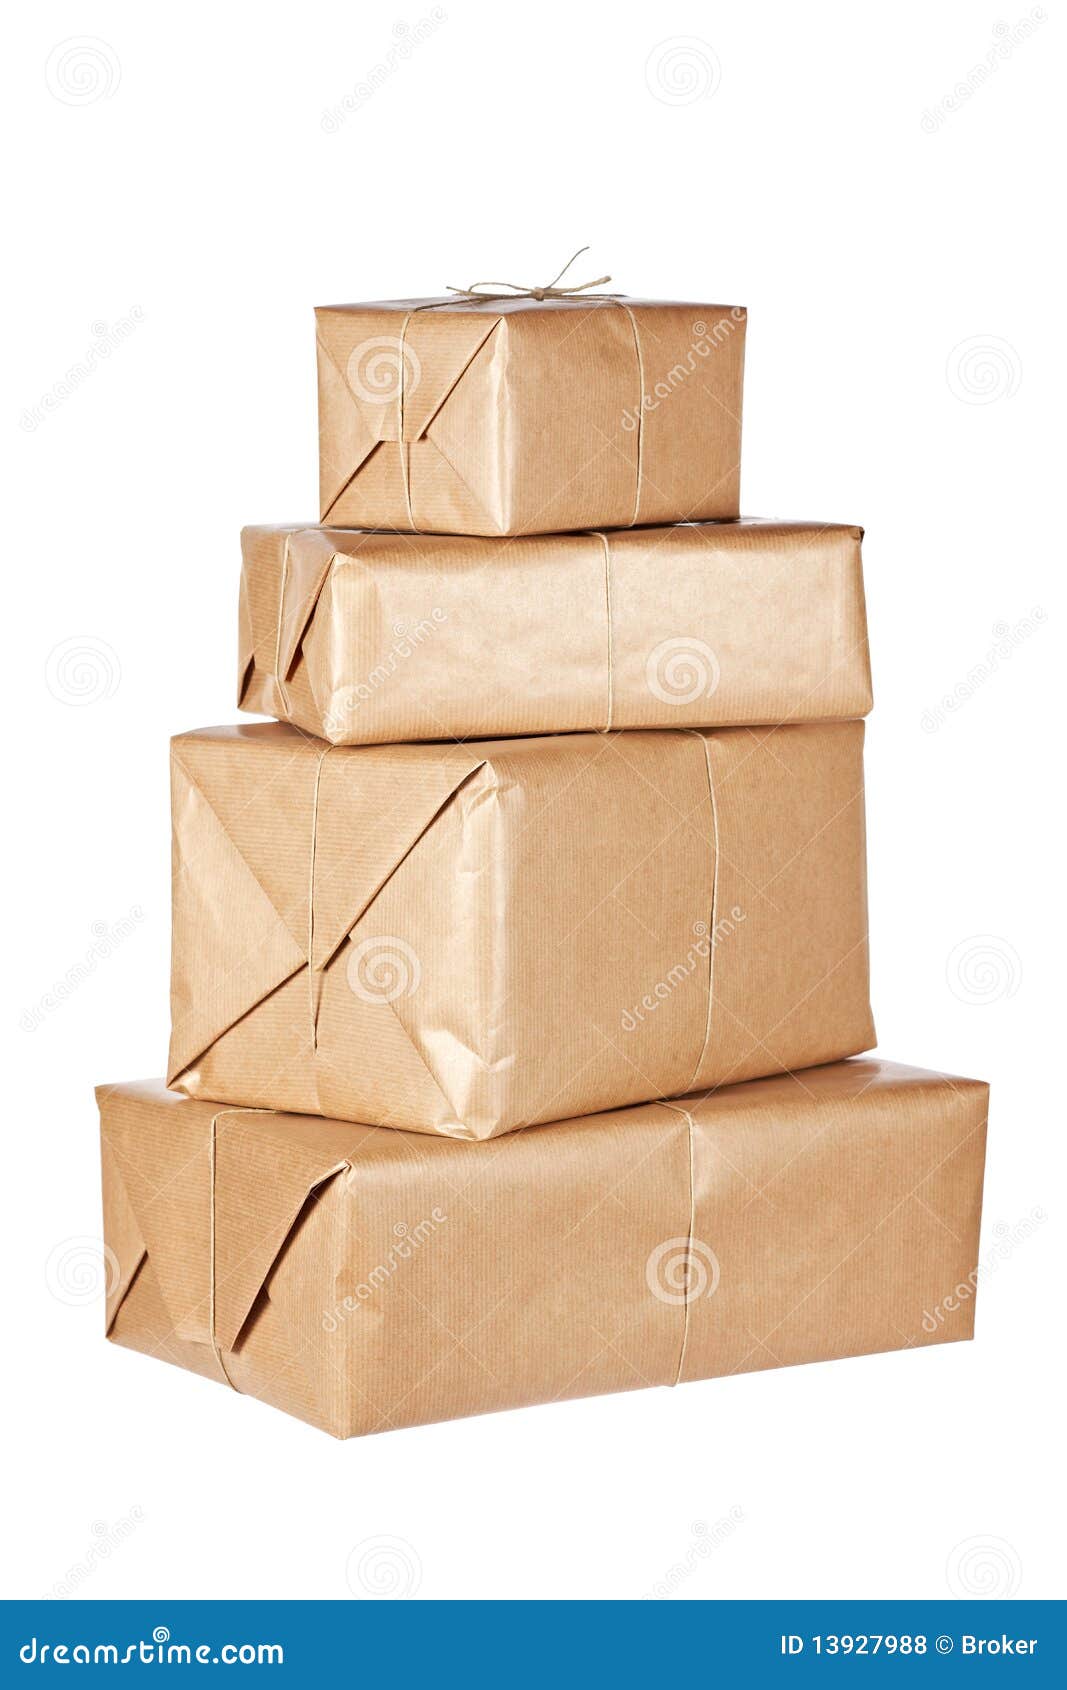 brown packages